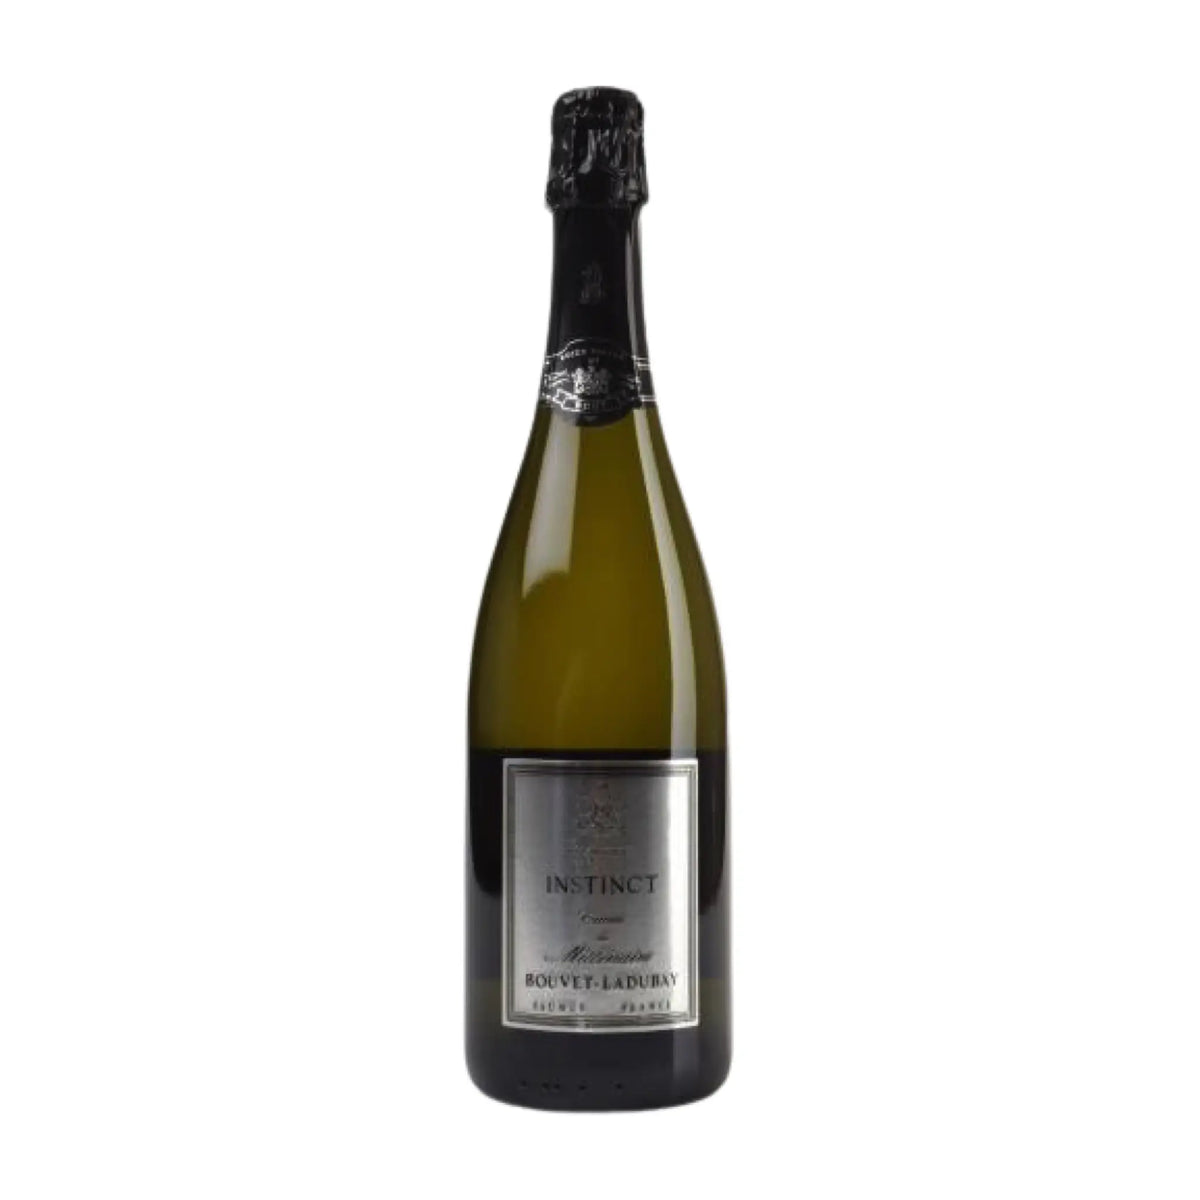 Bouvet Ladubay-Schaumwein-Chenin Blanc, Chardonnay-2018 Instinct Blanc Saumur Brut Millesime AOP-WINECOM